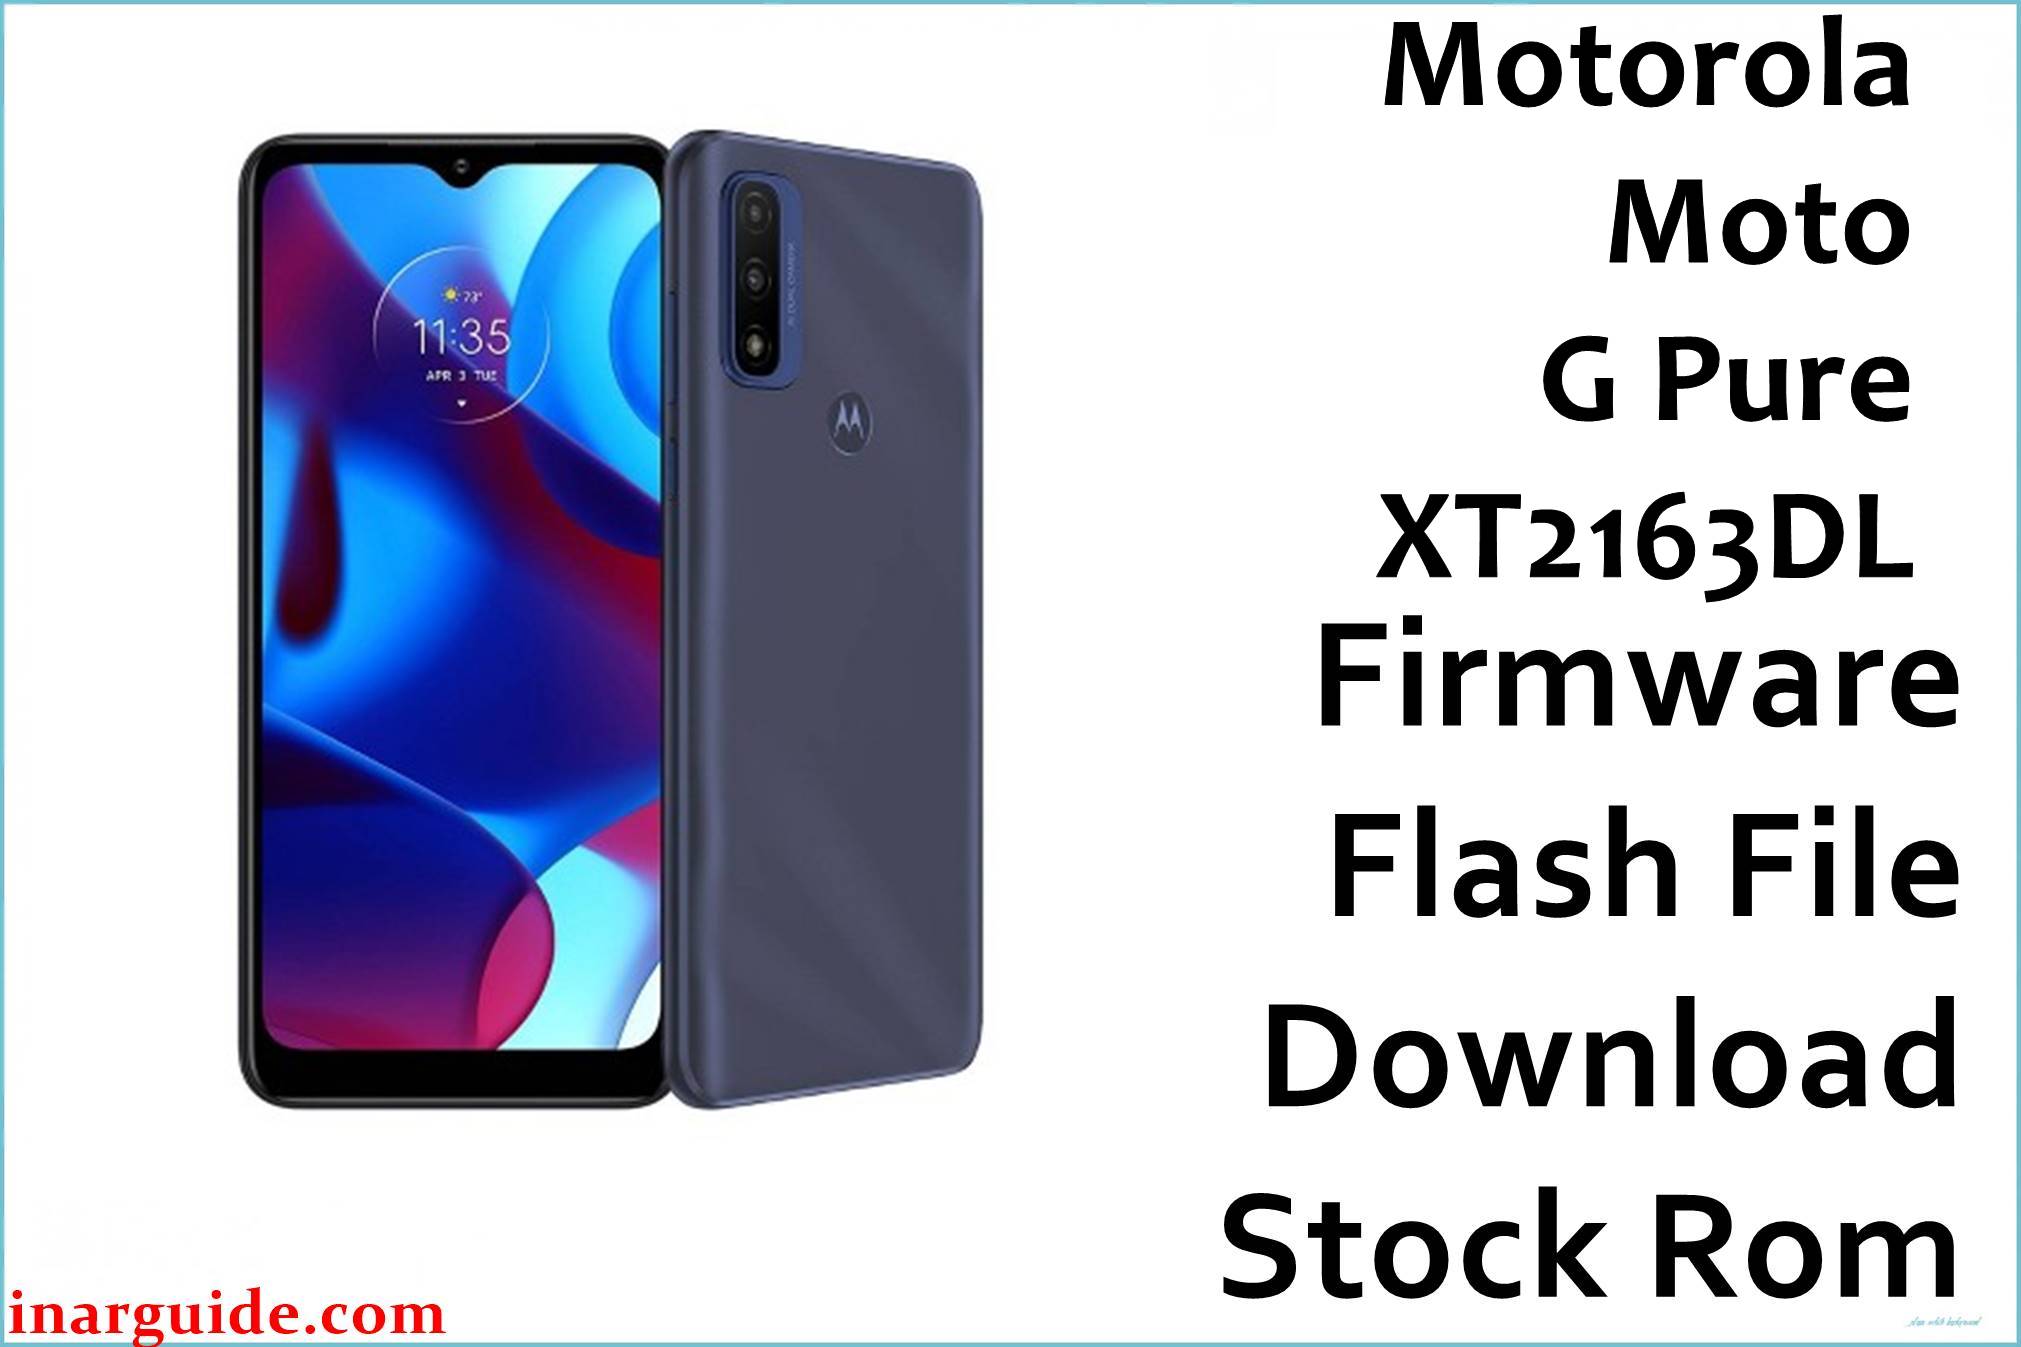 Motorola Moto G Pure XT2163DL